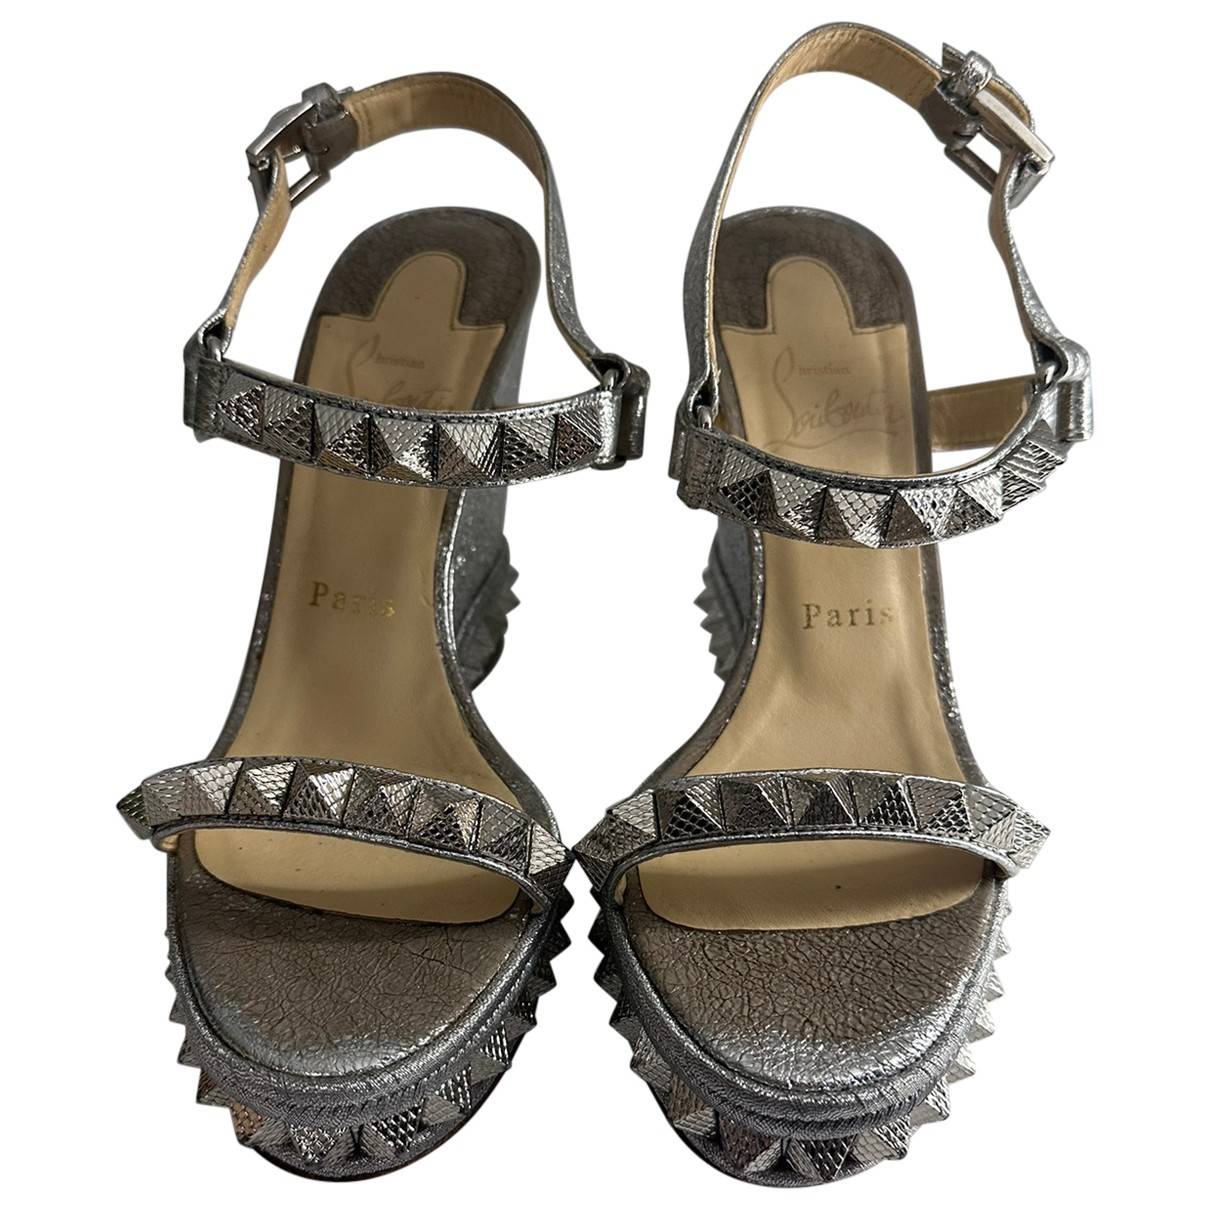 Cataclou leather sandal Christian Louboutin Silver size 38 EU in